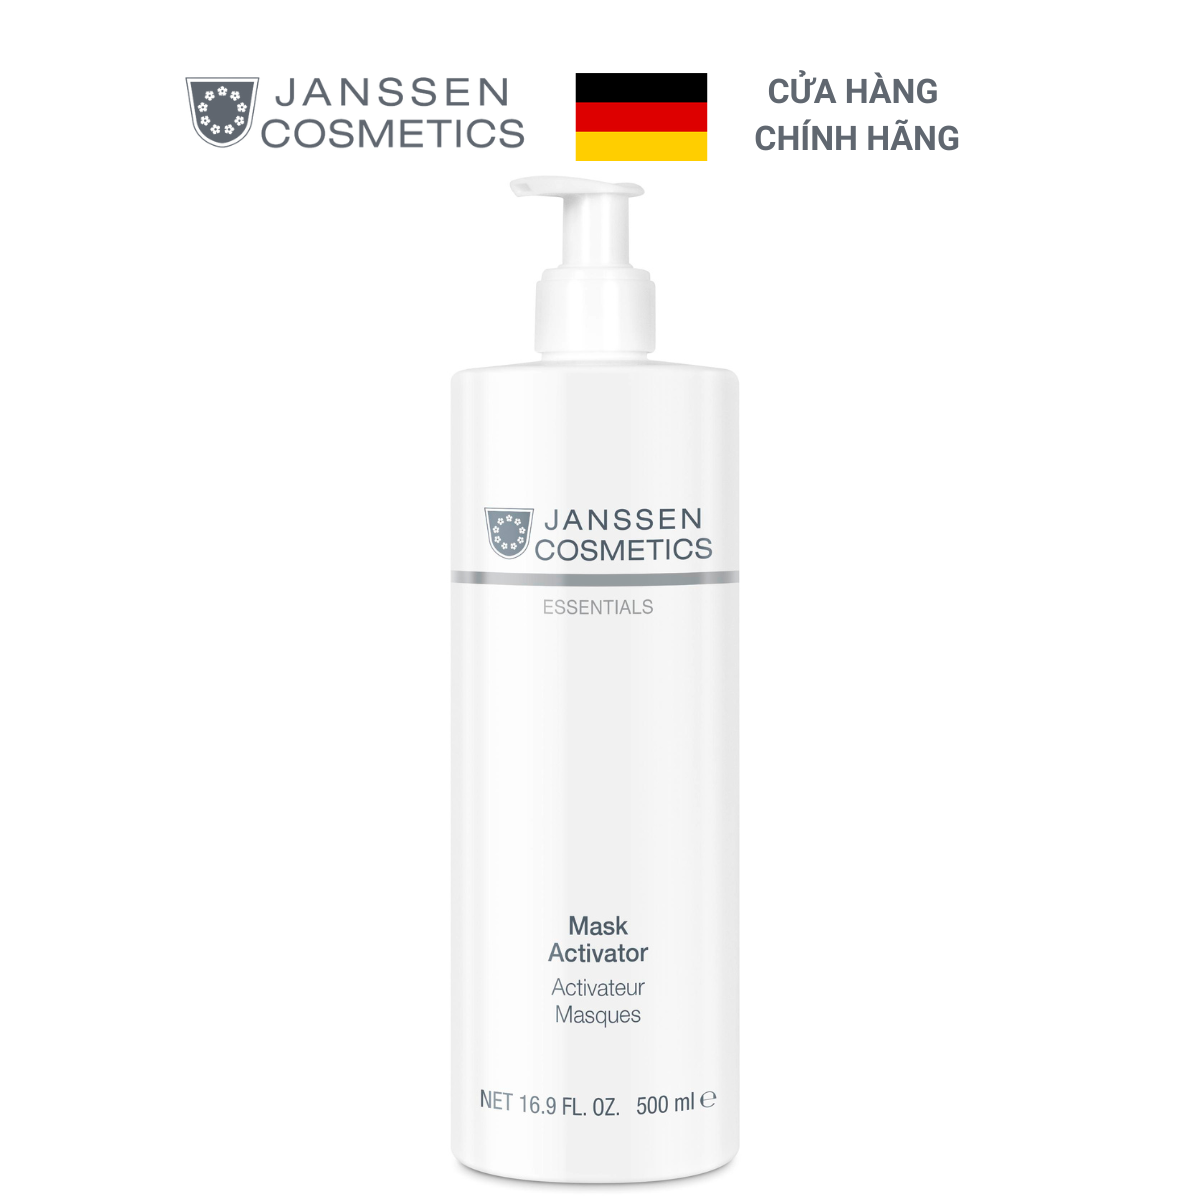  Nước kích hoạt mặt nạ Janssen Cosmetics Mask Activator 500ml 